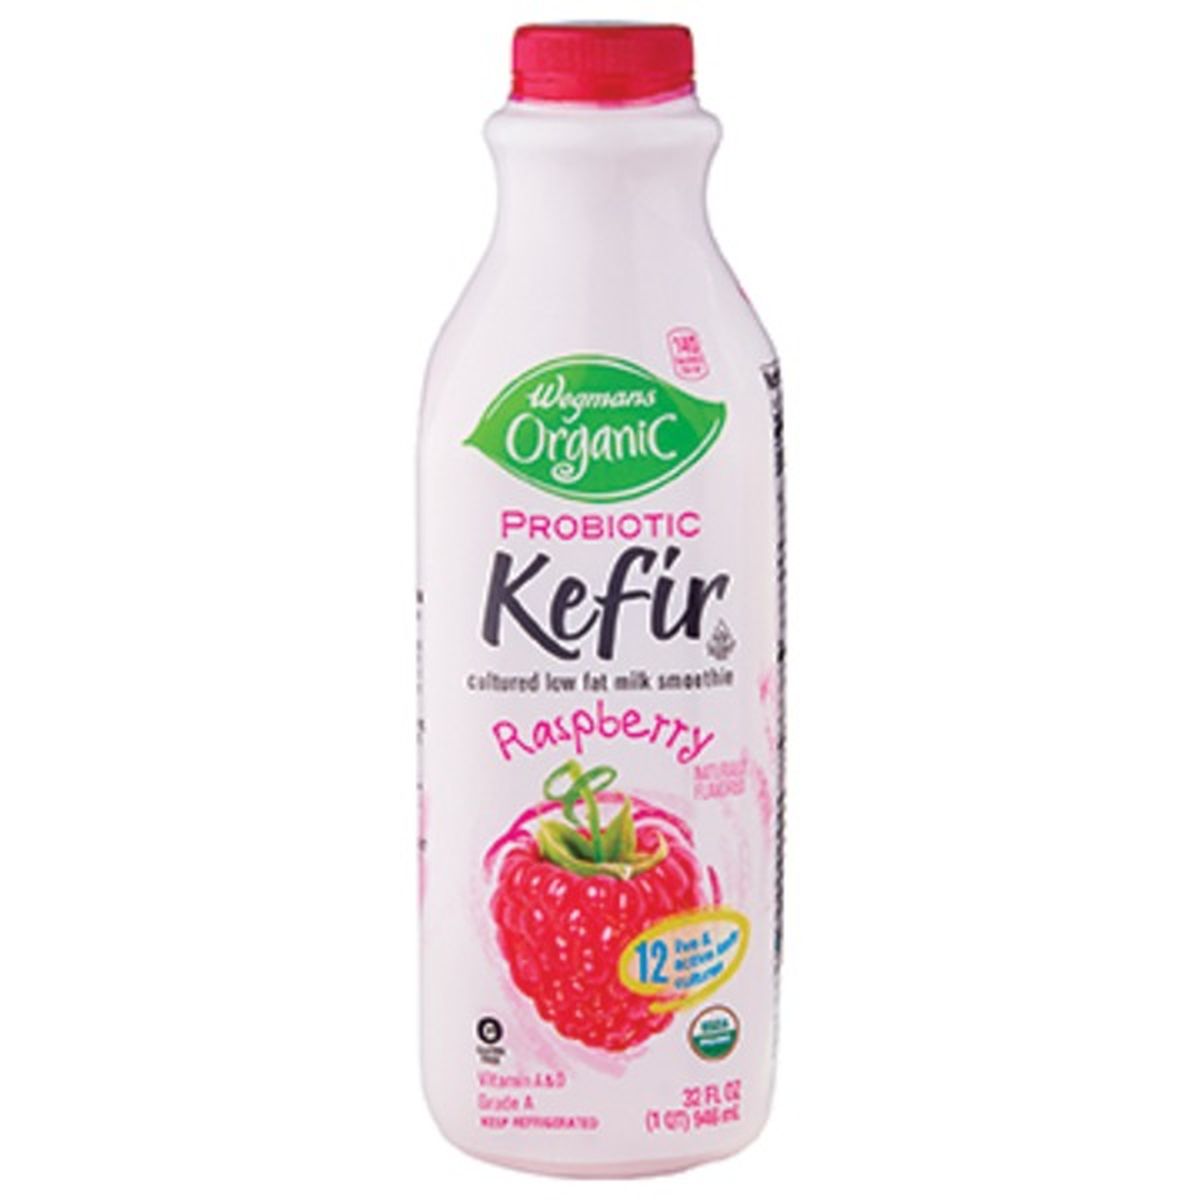 Calories in Wegmans Organic Raspberry Probiotic Kefir